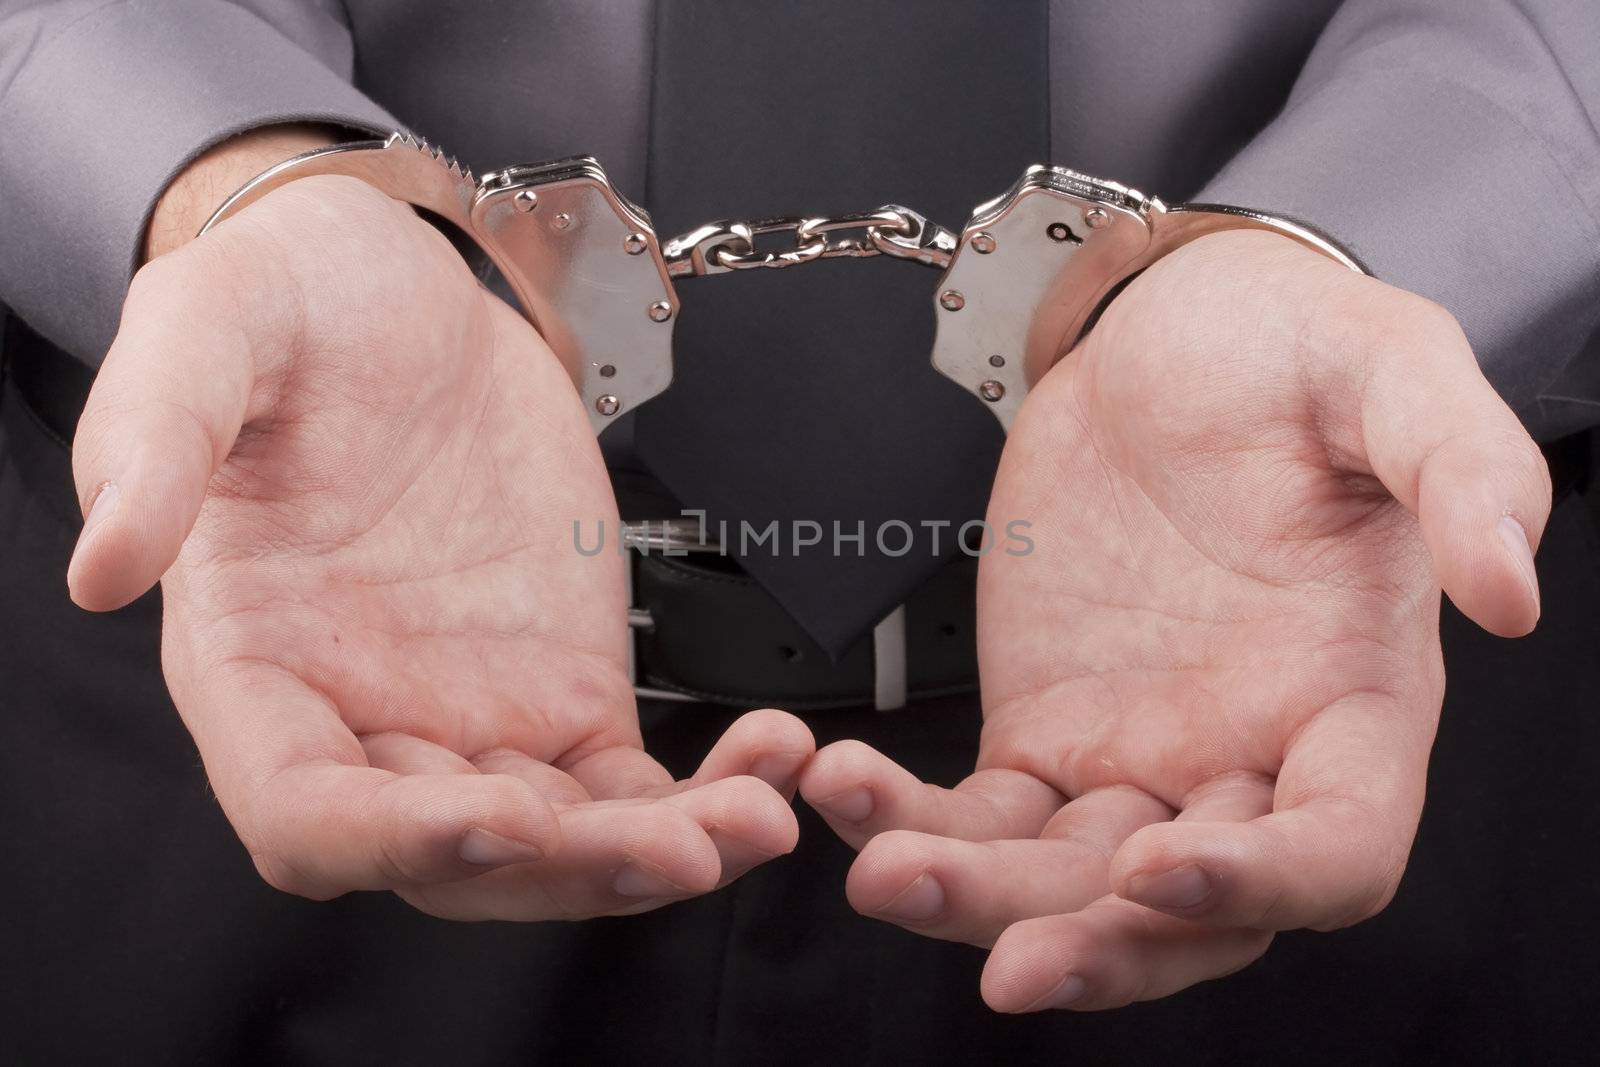 Arrest, close-up shot man's hands with handcuffs.